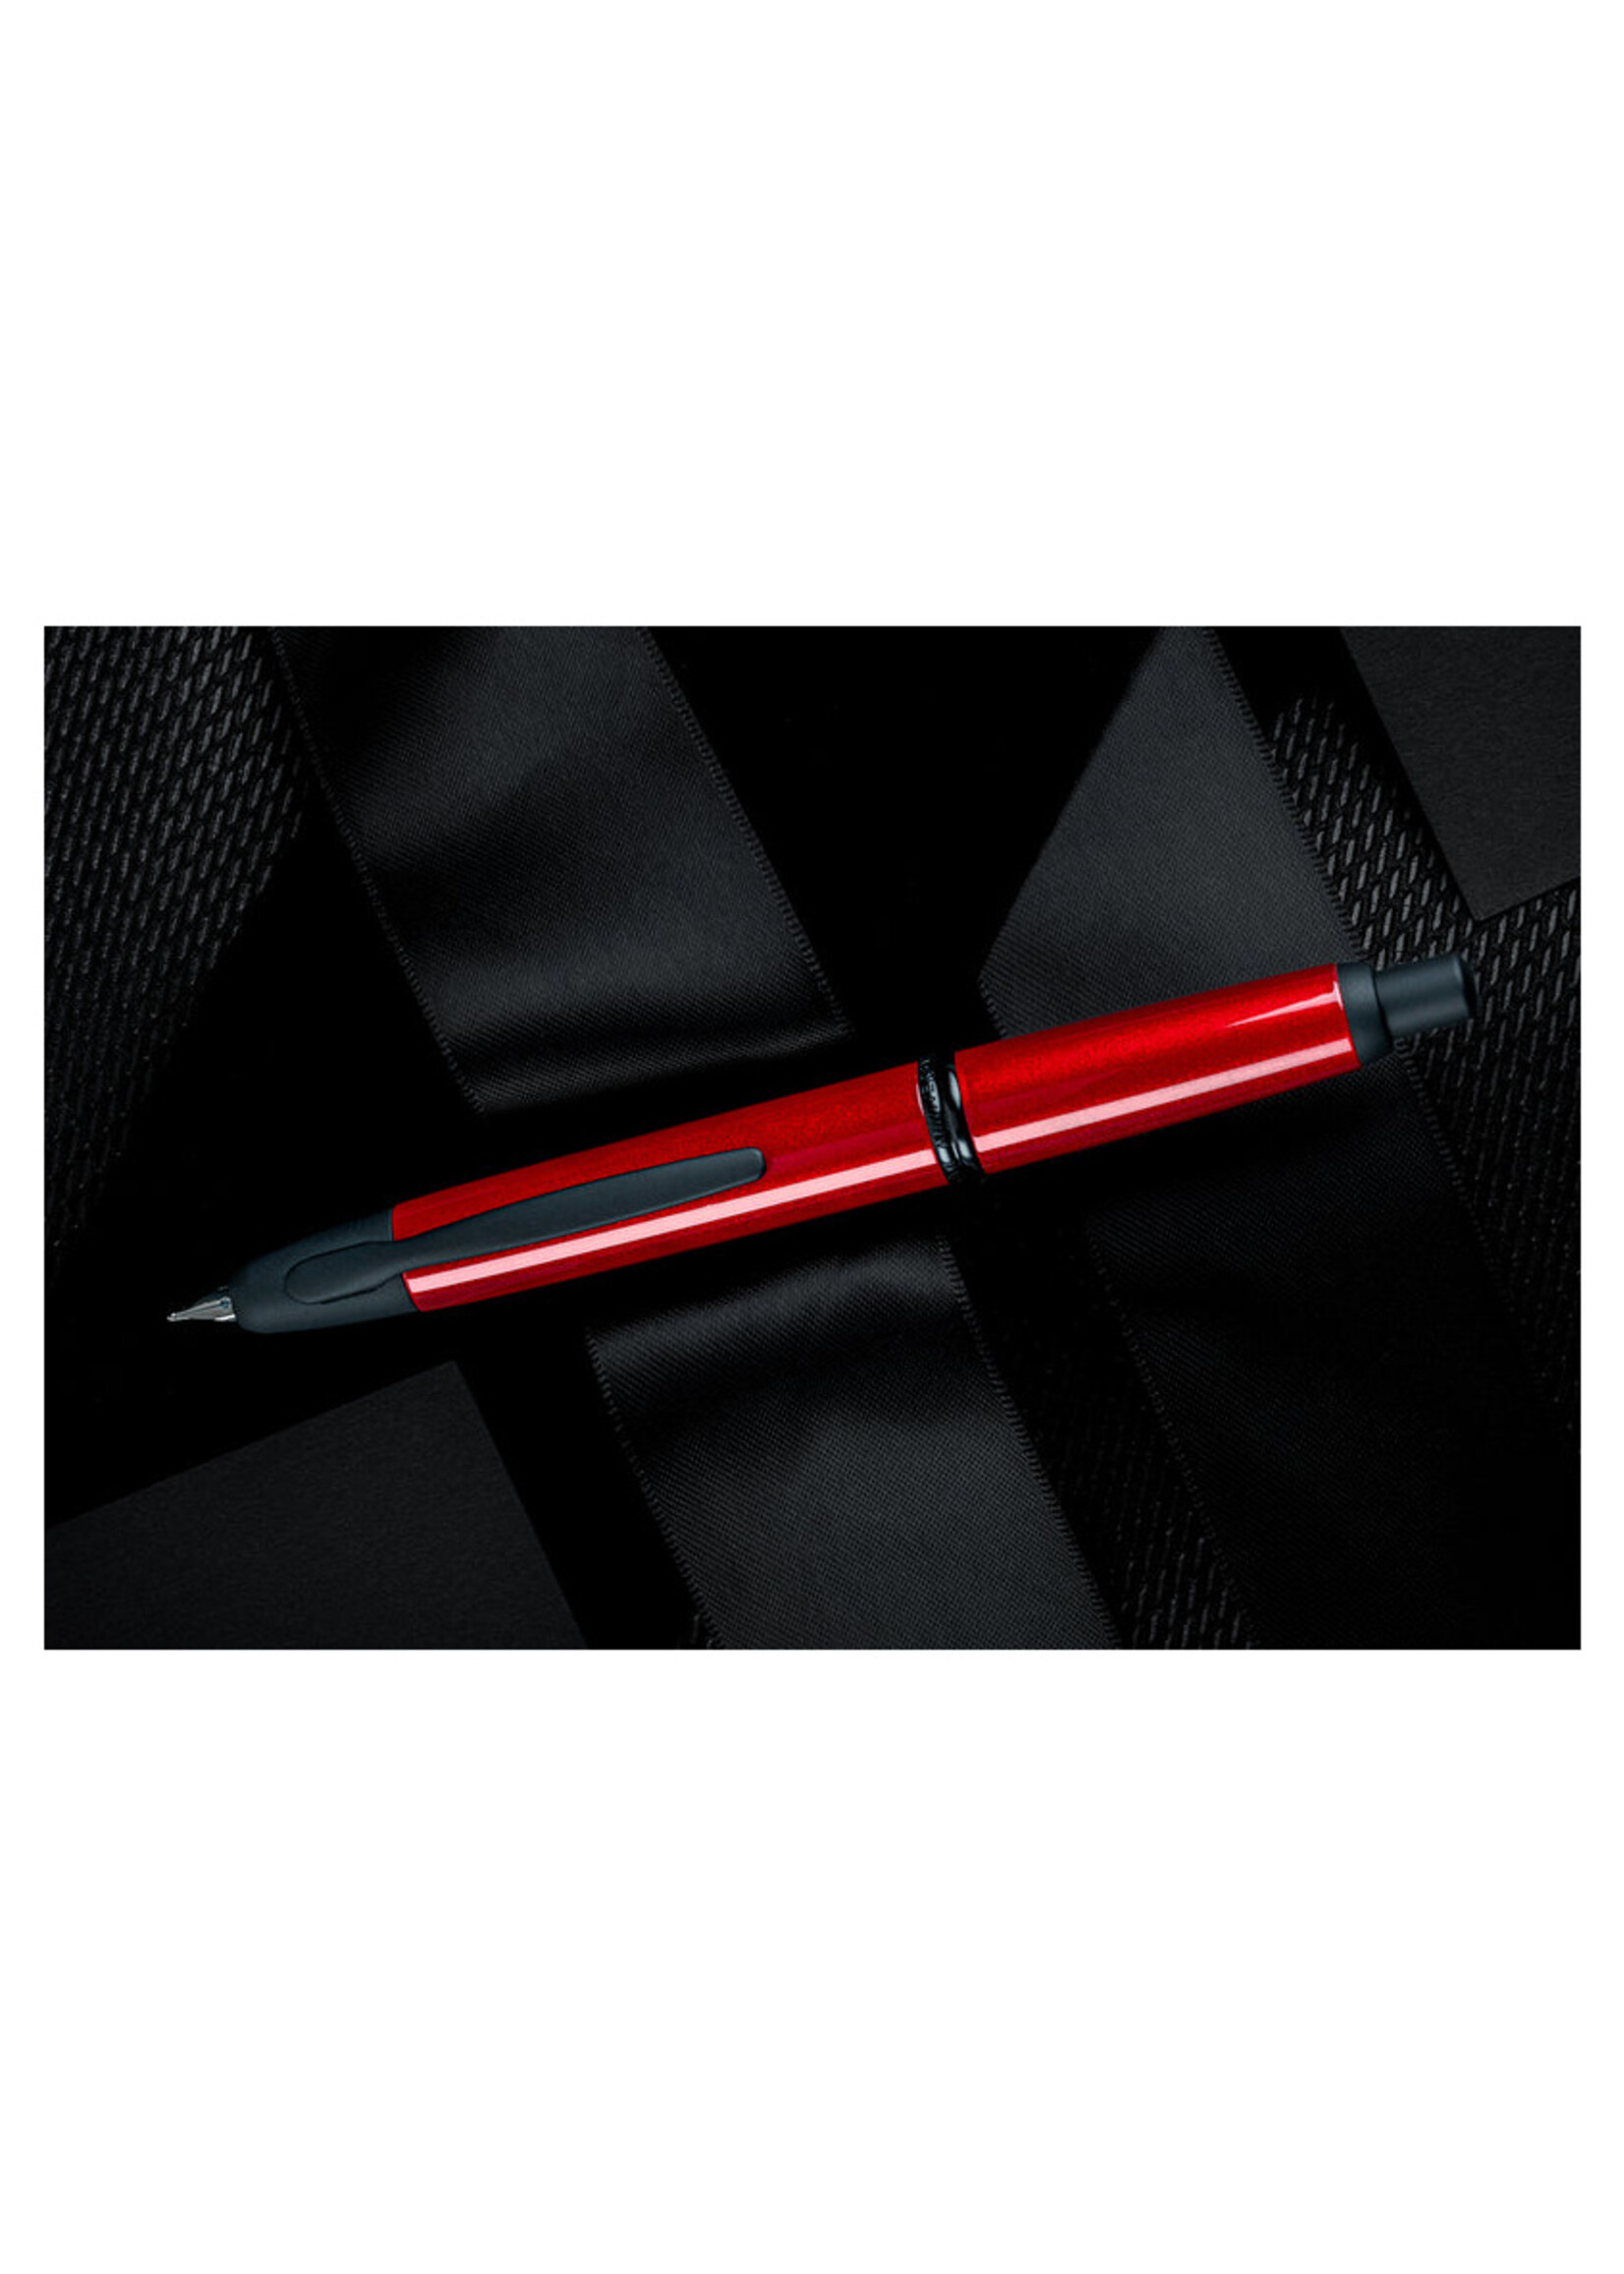 Capless 60th ANNIVERSARY Exclusive Matte Black & Red Gift Box Vulpen VERWACHT OKTOBER 2023